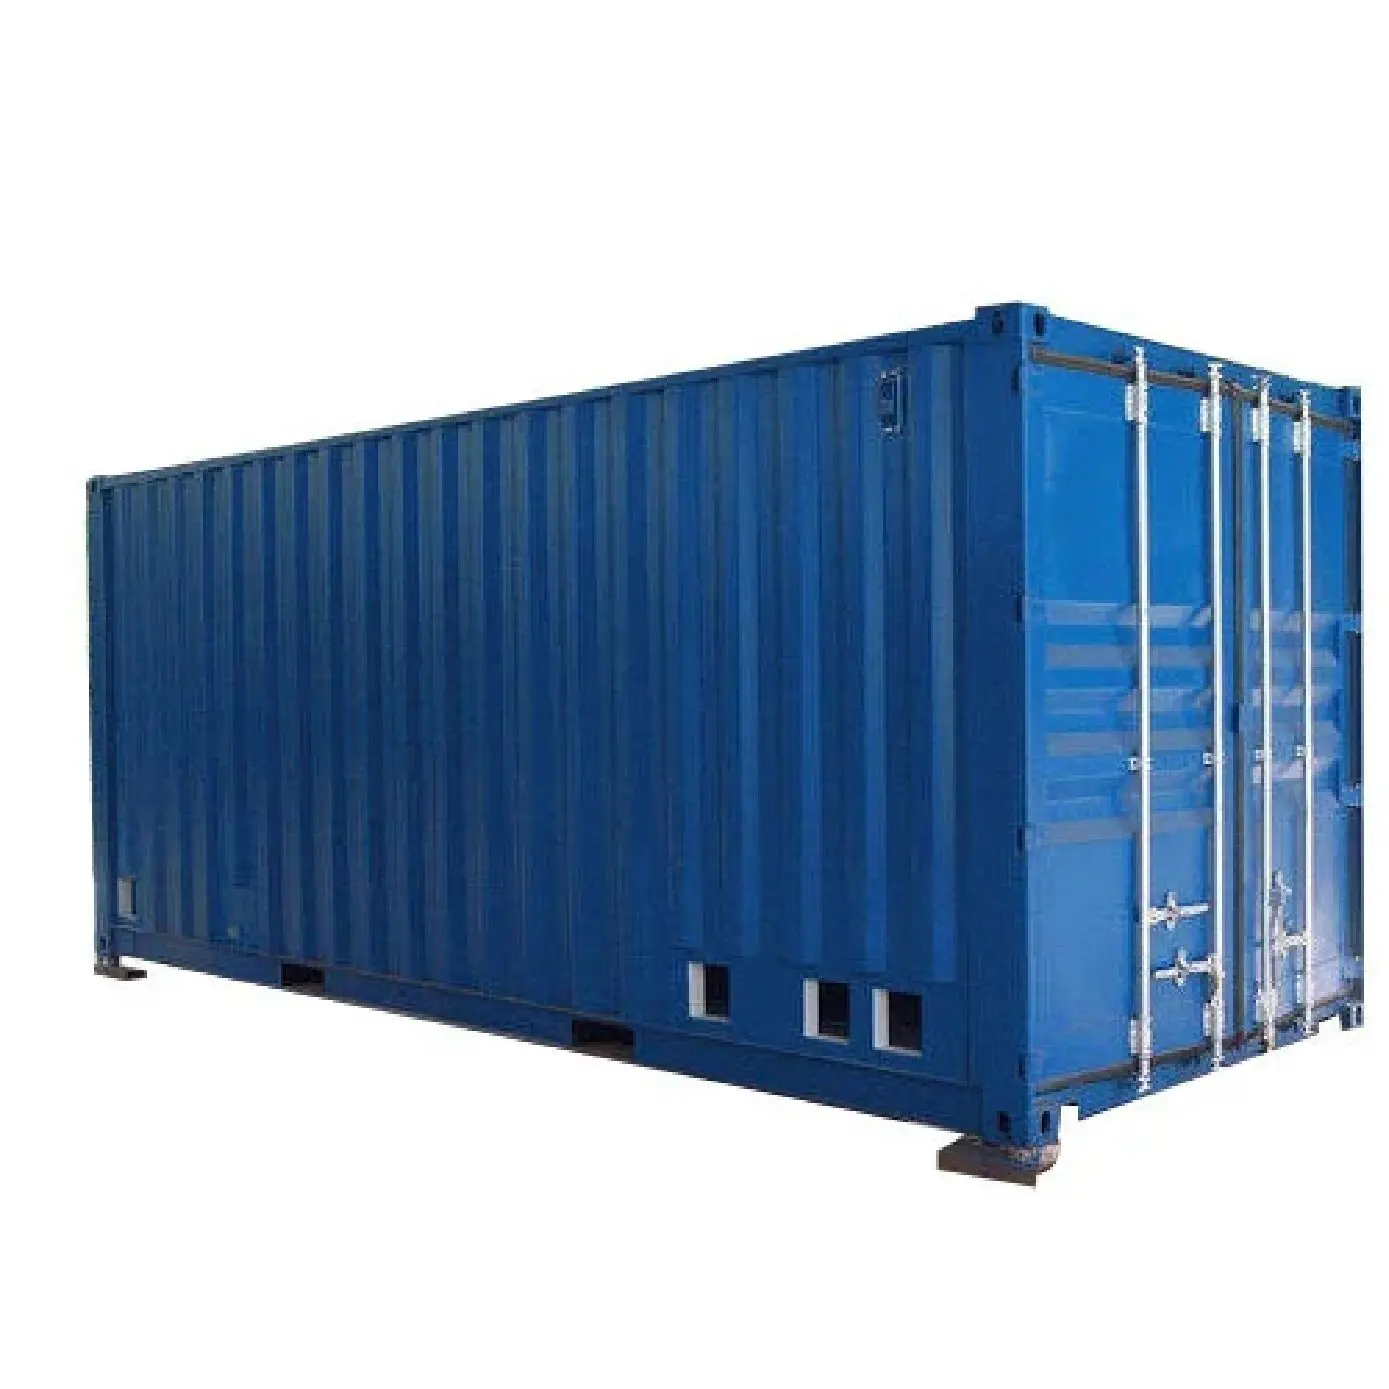 Container height. Контейнер 1сс 20 футов. Контейнер 1сс универсальный 20 футовый. Рефрижераторный контейнер 20 футов. Контейнер универсальный крупнотоннажный 20-фут 1сс.